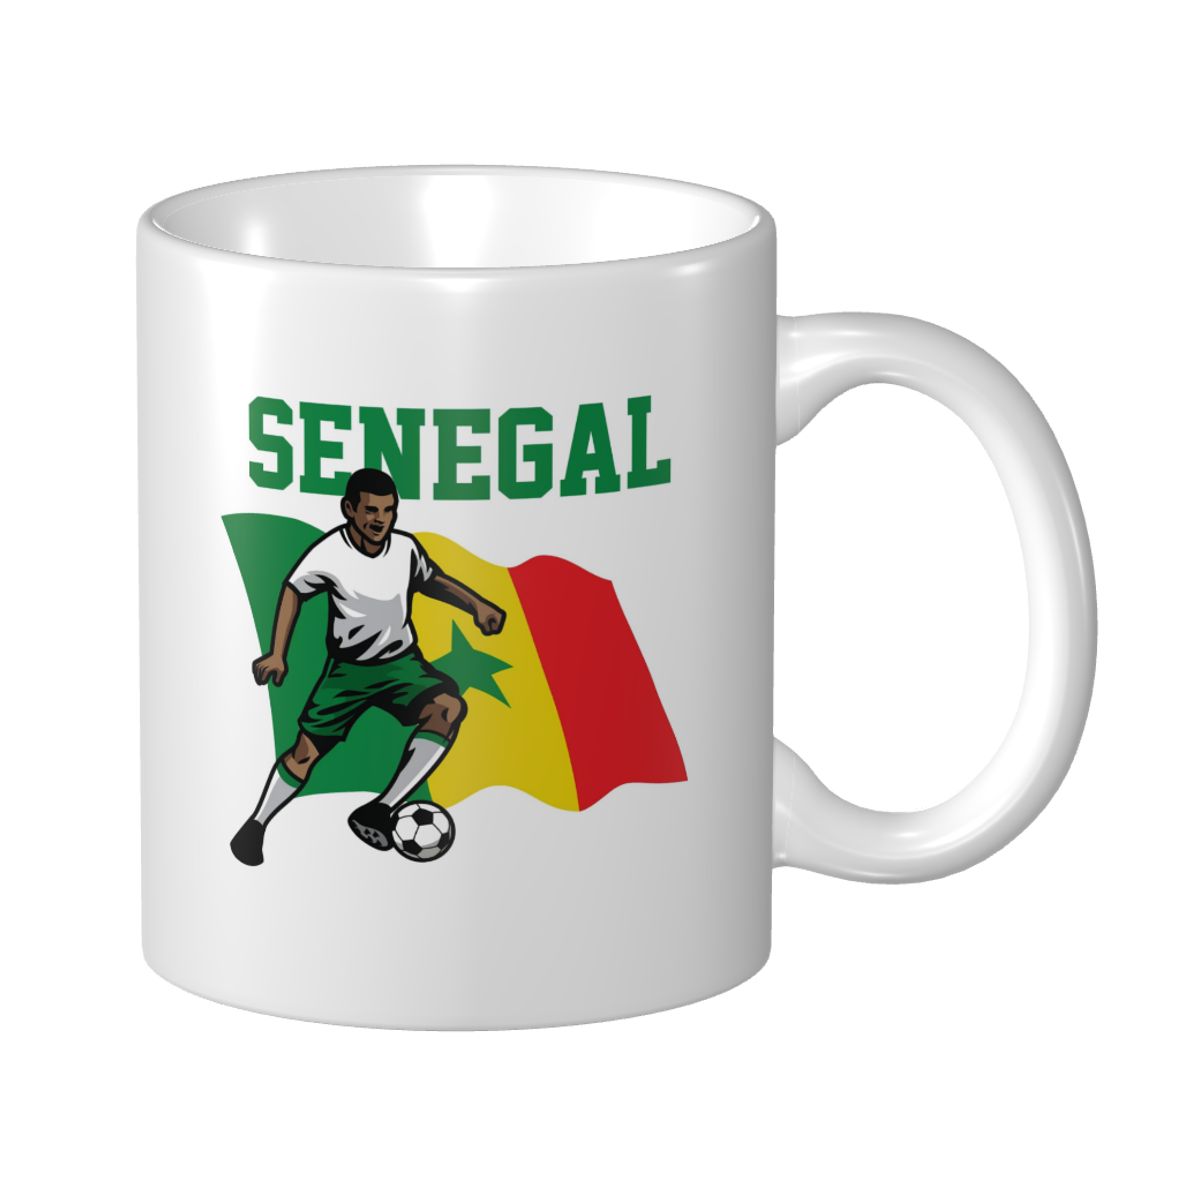 Senegal Soccer Player Ceramic Mug